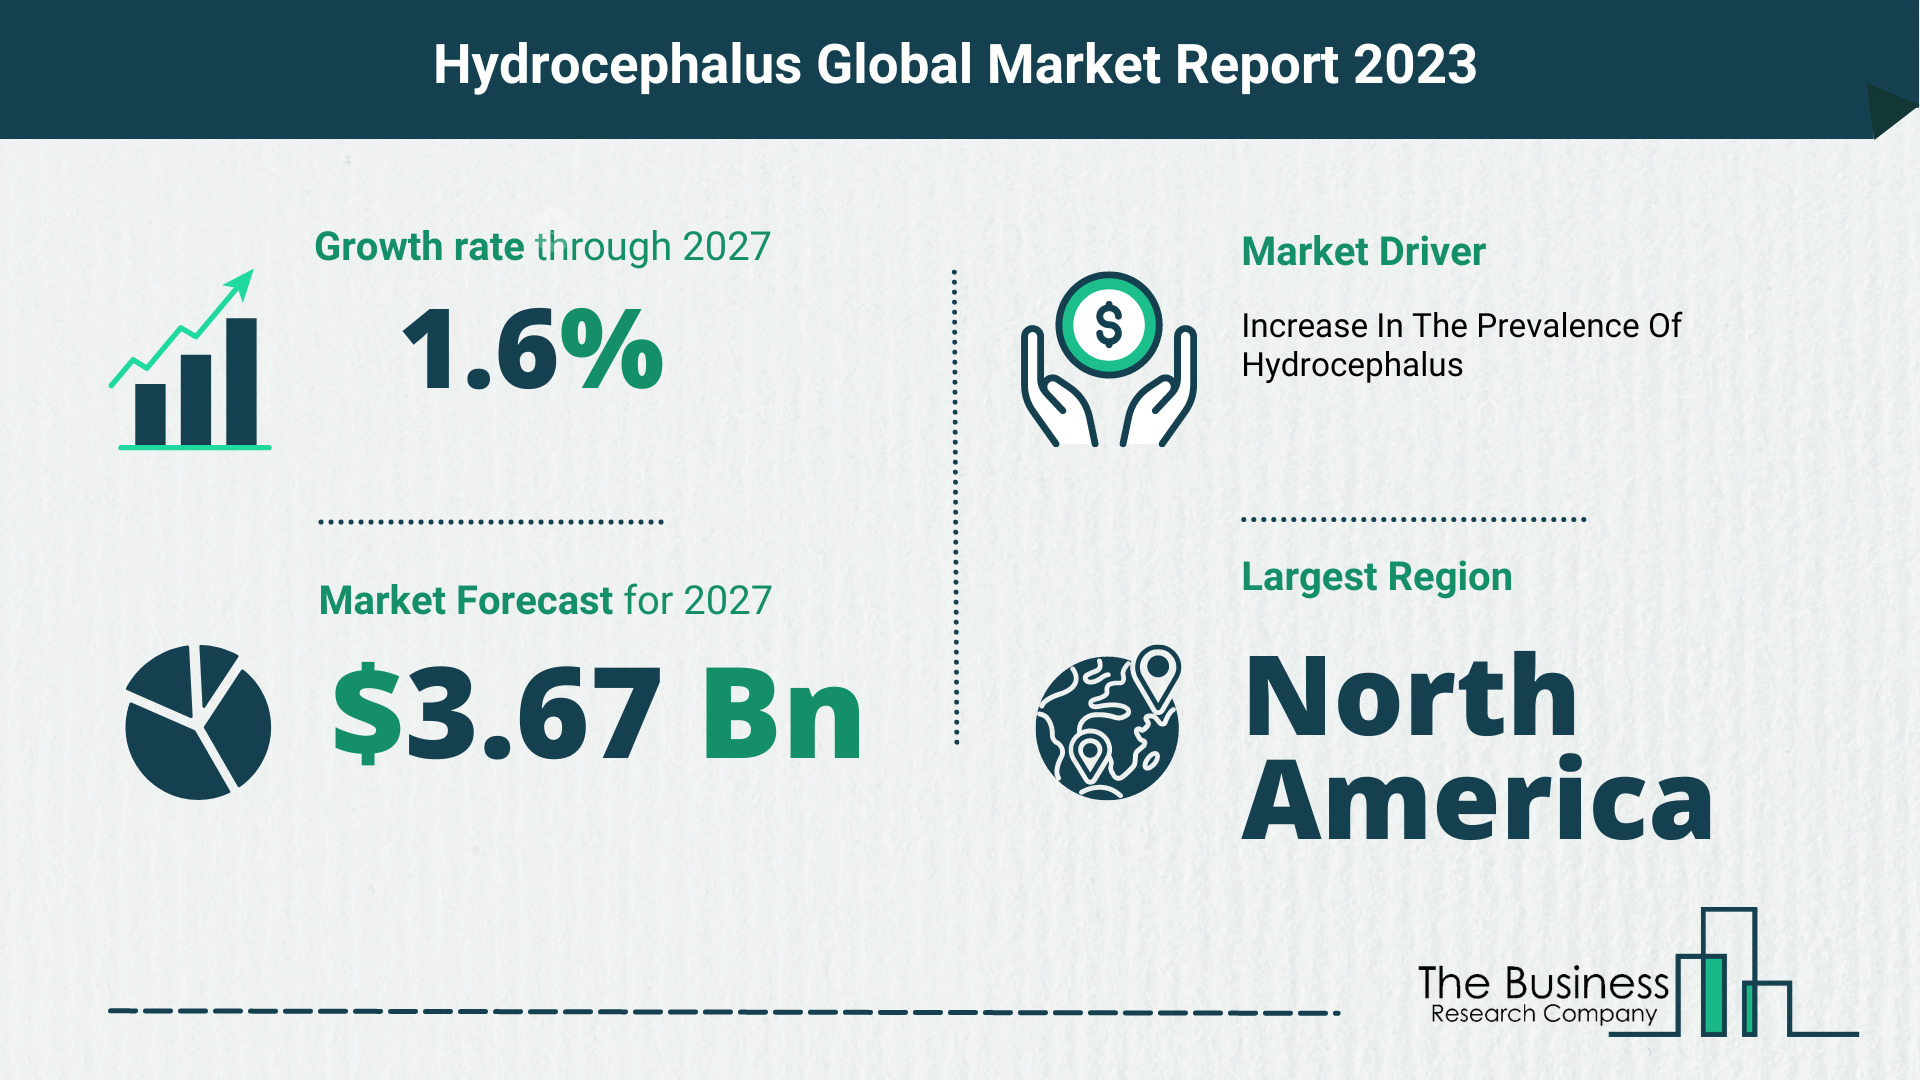 Global Hydrocephalus Market